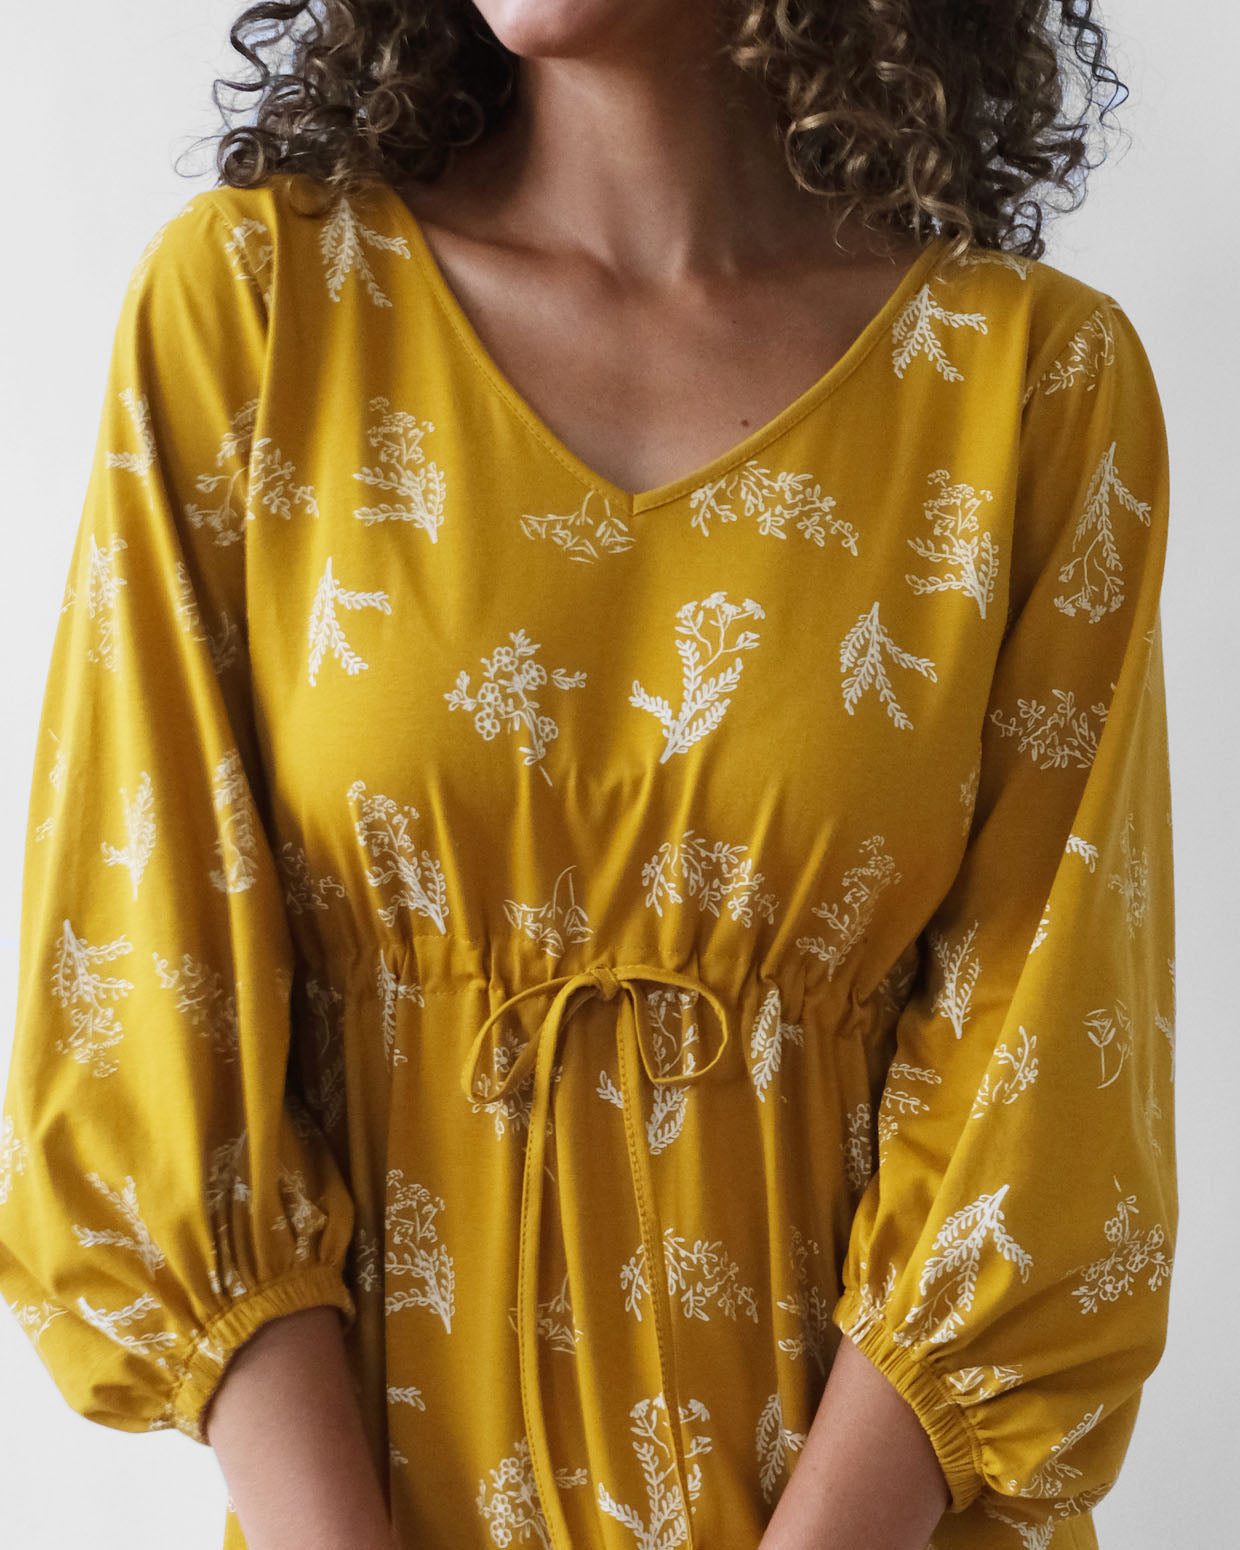 MARIGOLD printed dress in Mustard/White